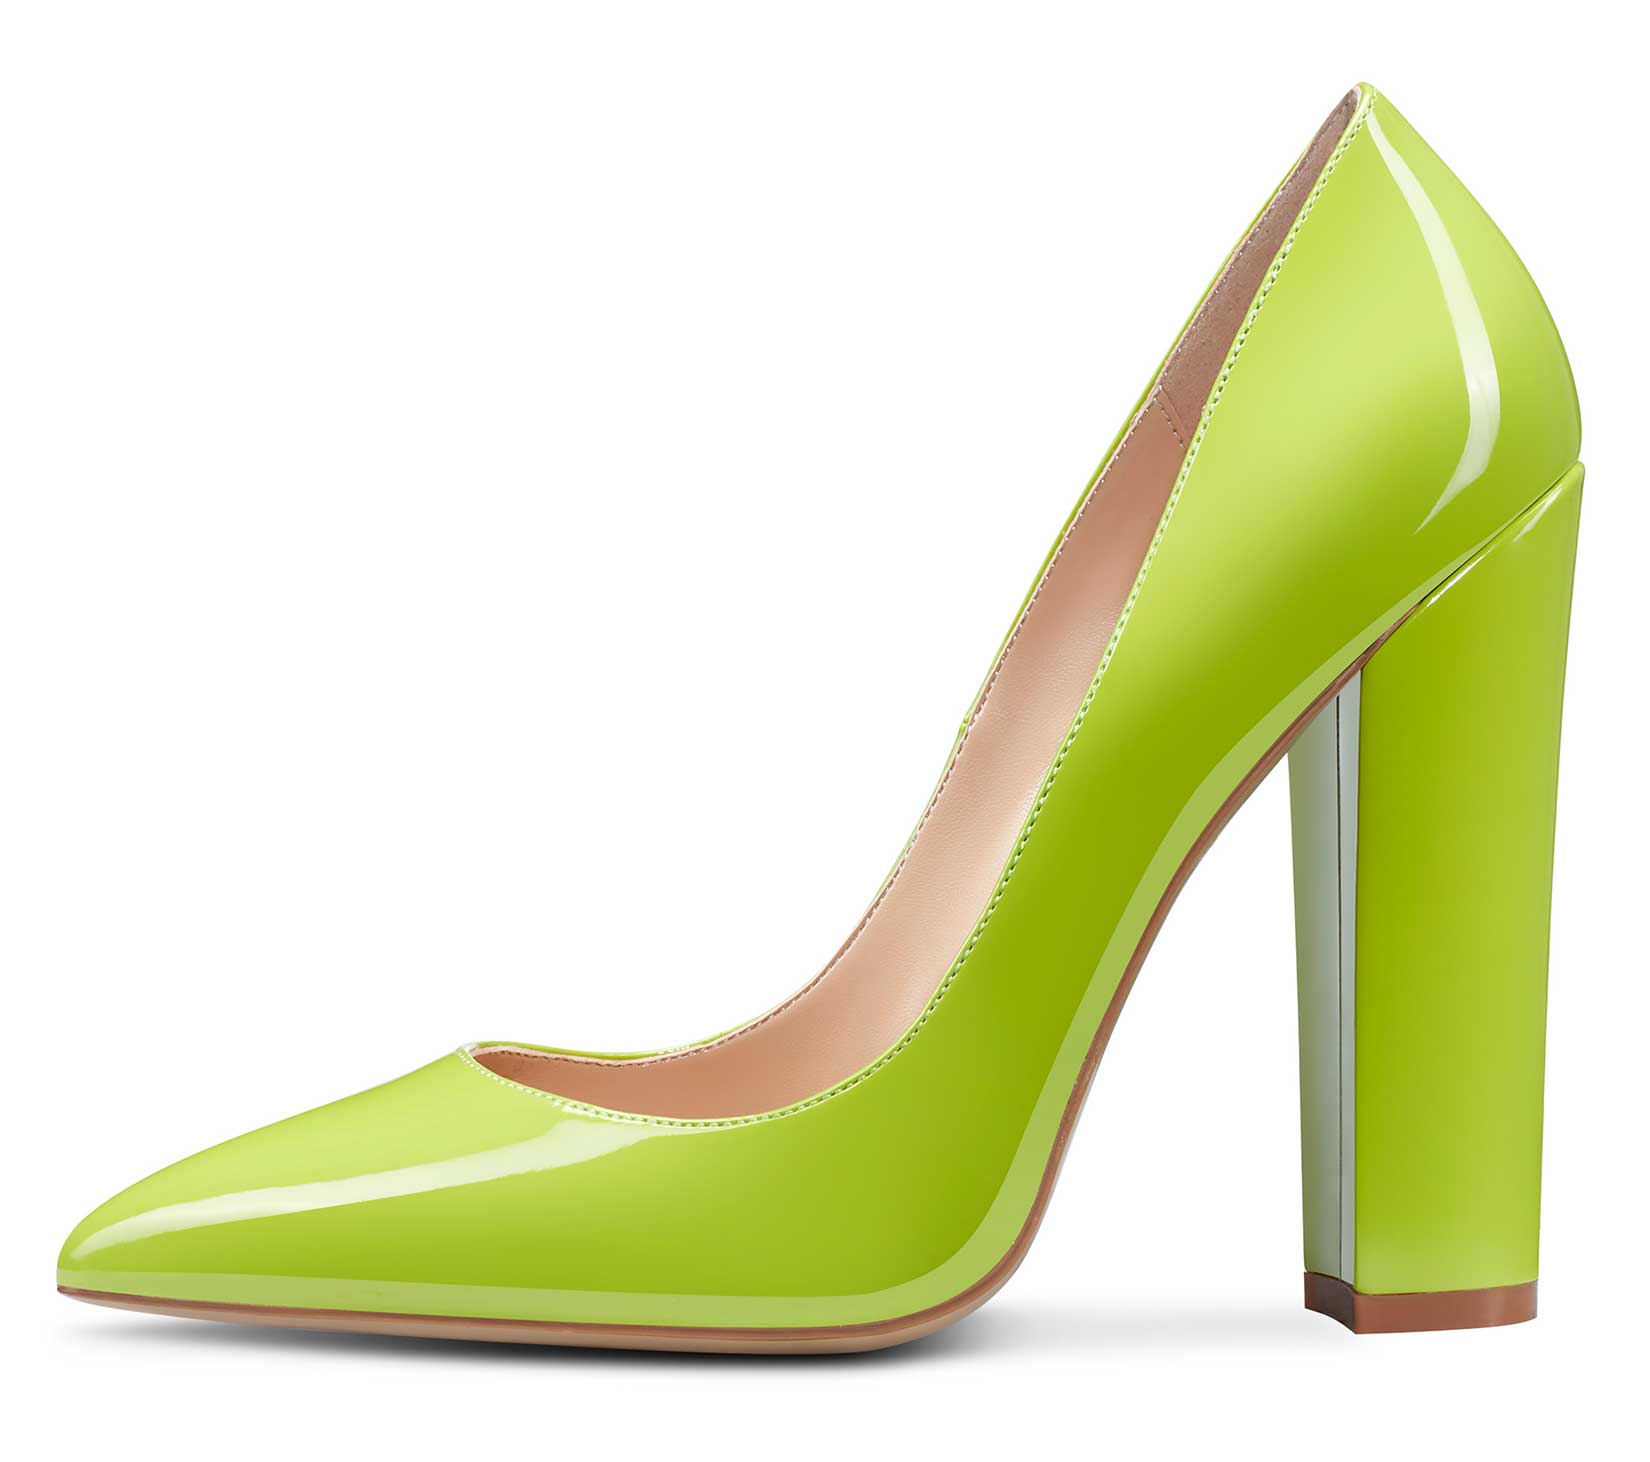 CASTAMERE Womens Sky High Block Heels Pumps Pointed Toe Slip-on 4.7 Inch Heels Shoes